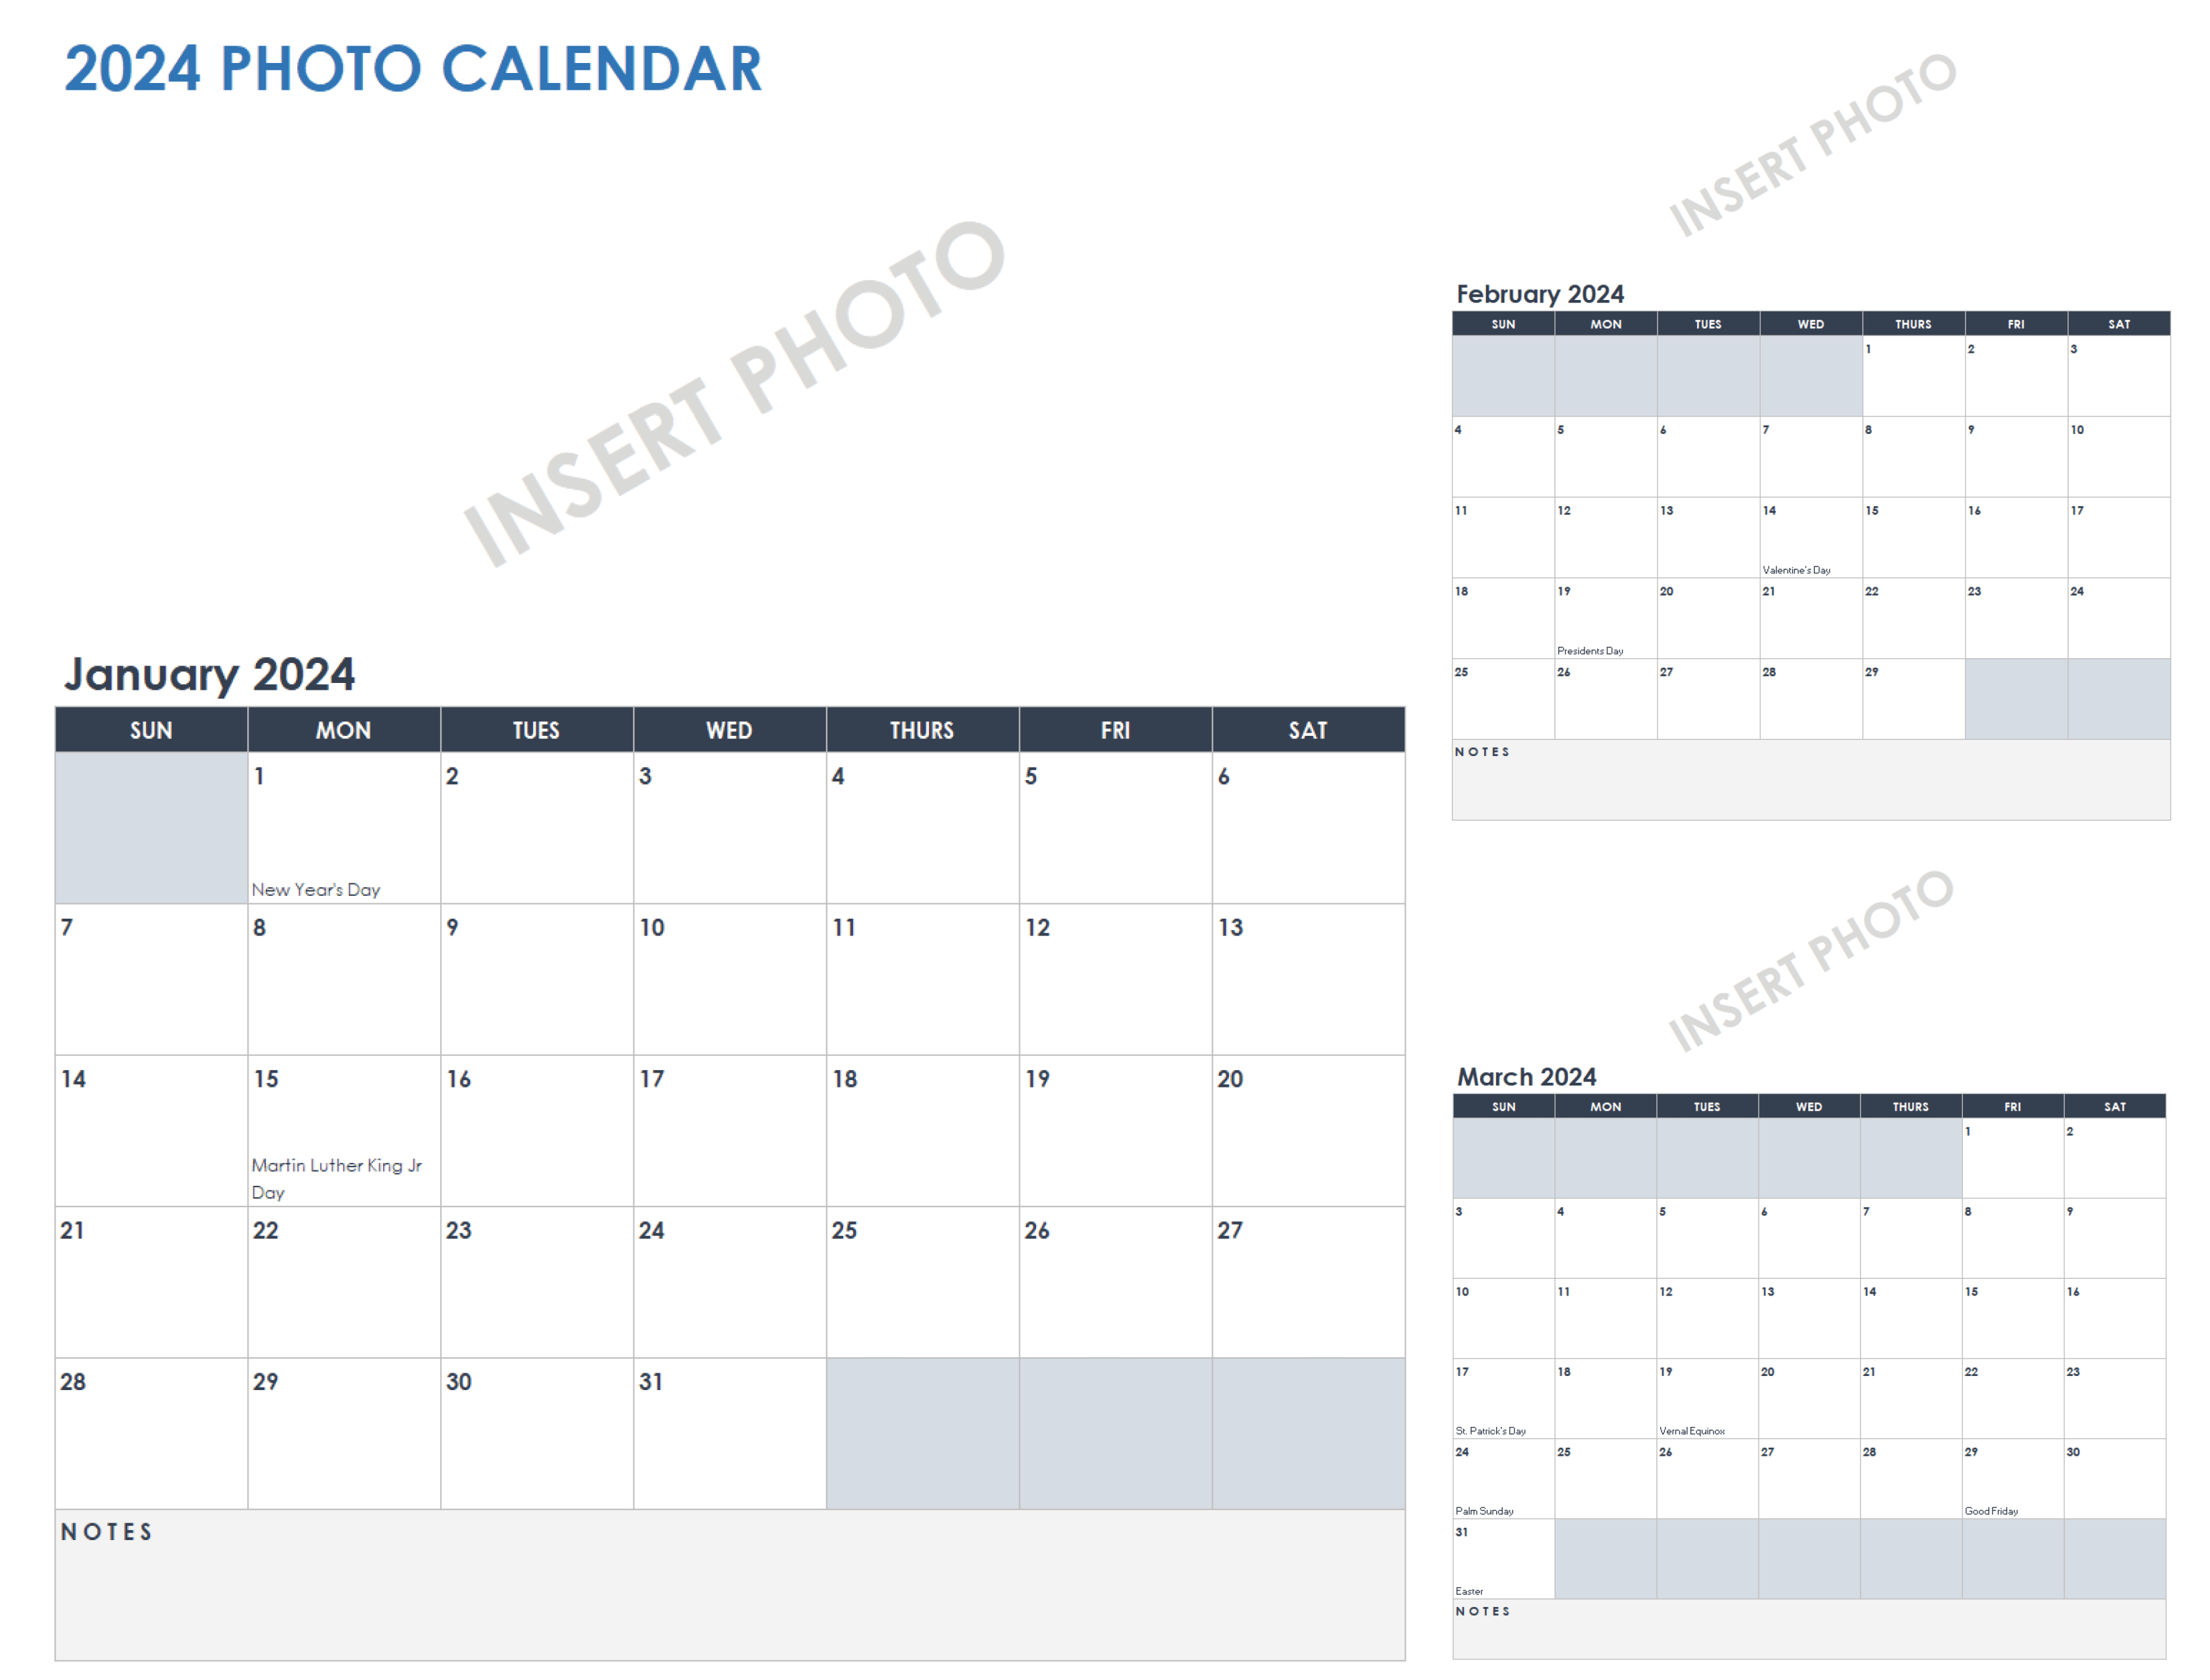 2024 Photo Calendar Template